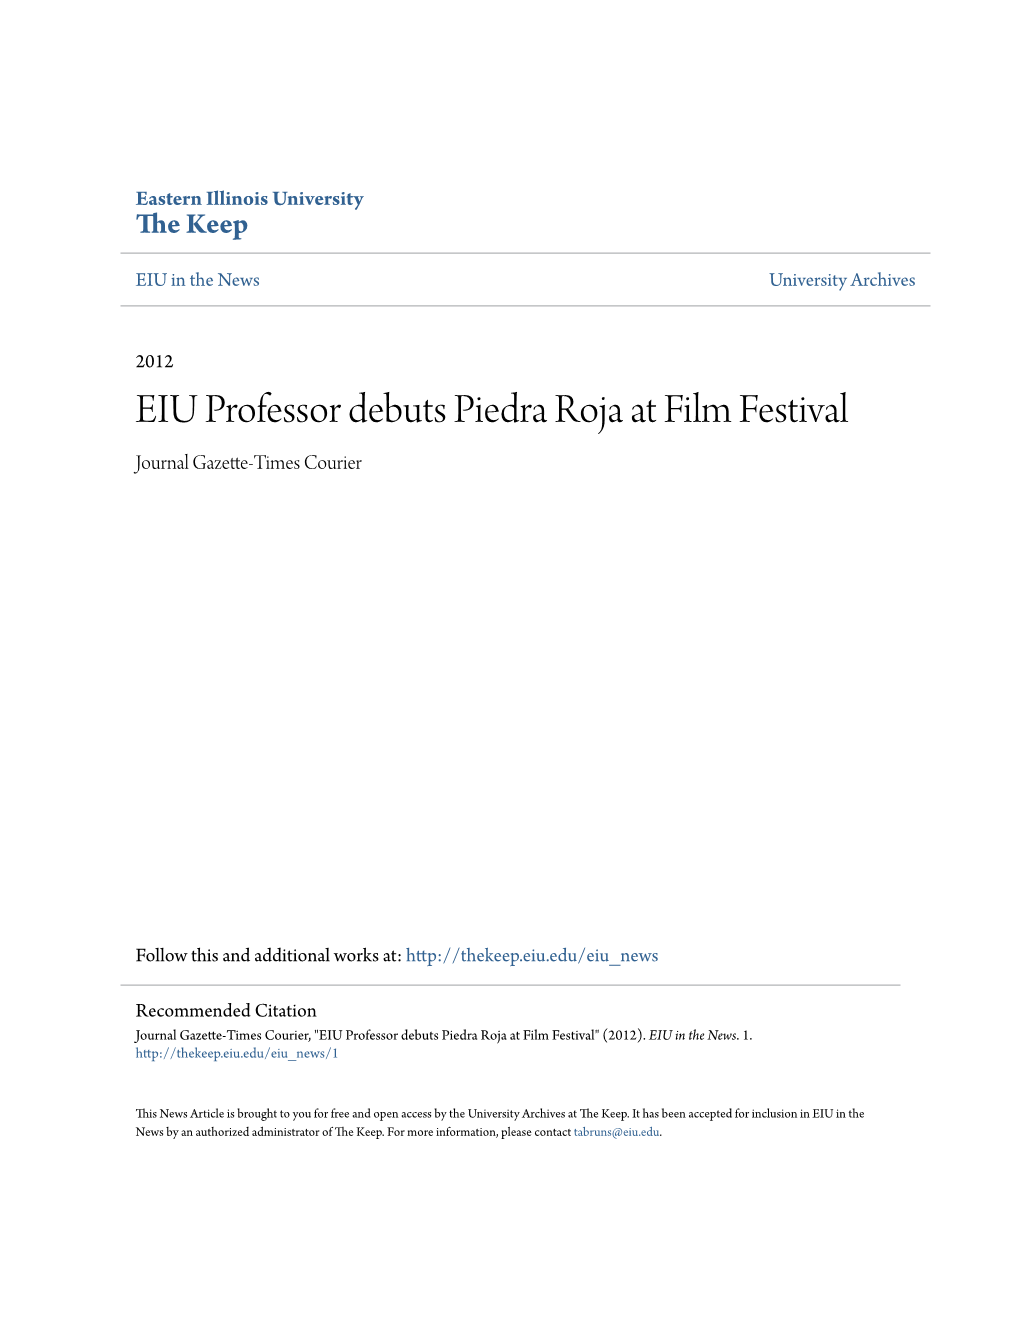 EIU Professor Debuts Piedra Roja at Film Festival Journal Gazette-Times Courier